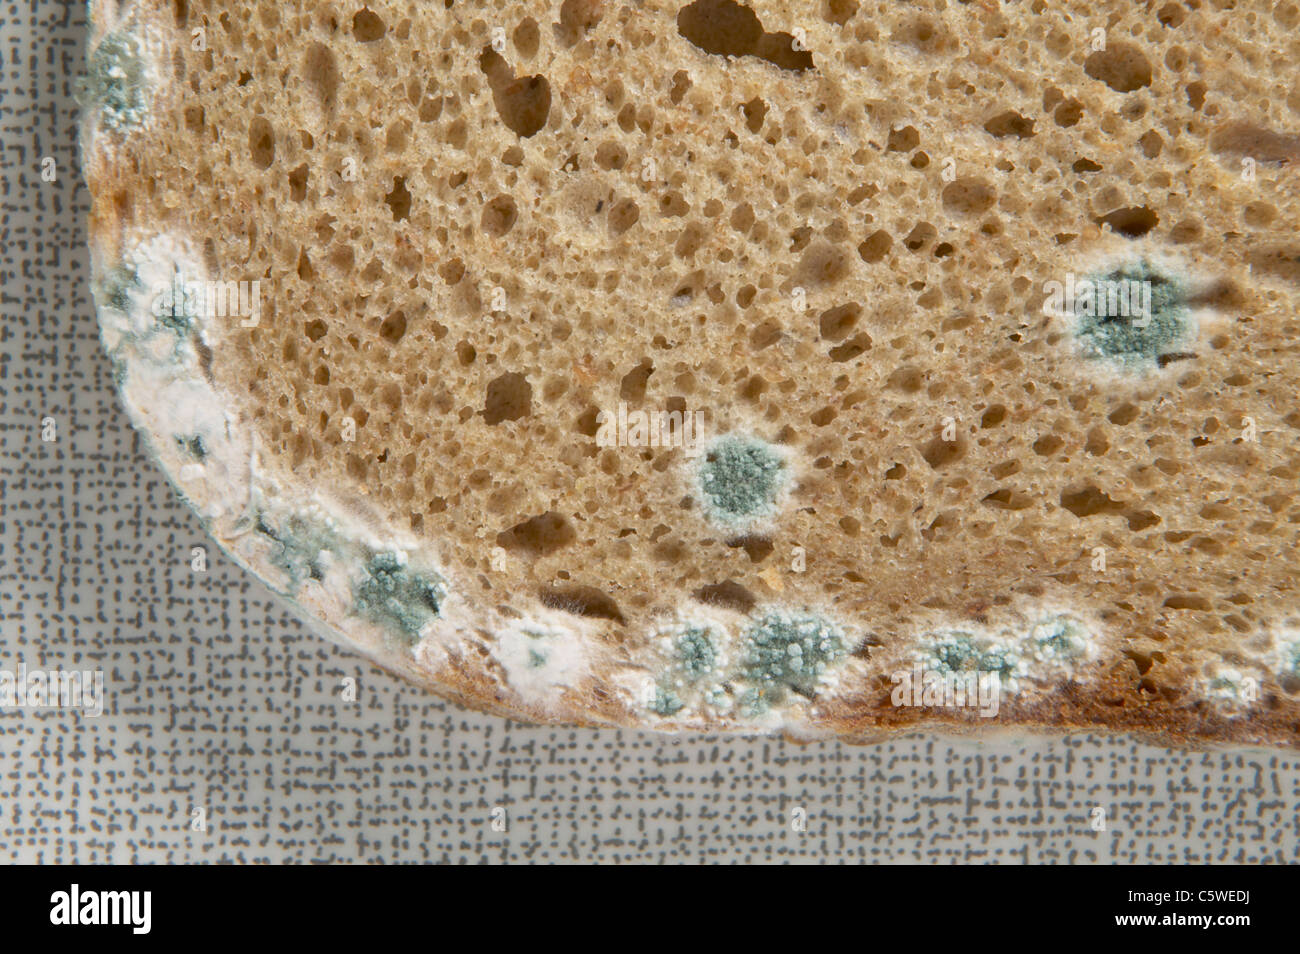 https://c8.alamy.com/comp/C5WEDJ/moulded-bread-close-up-C5WEDJ.jpg